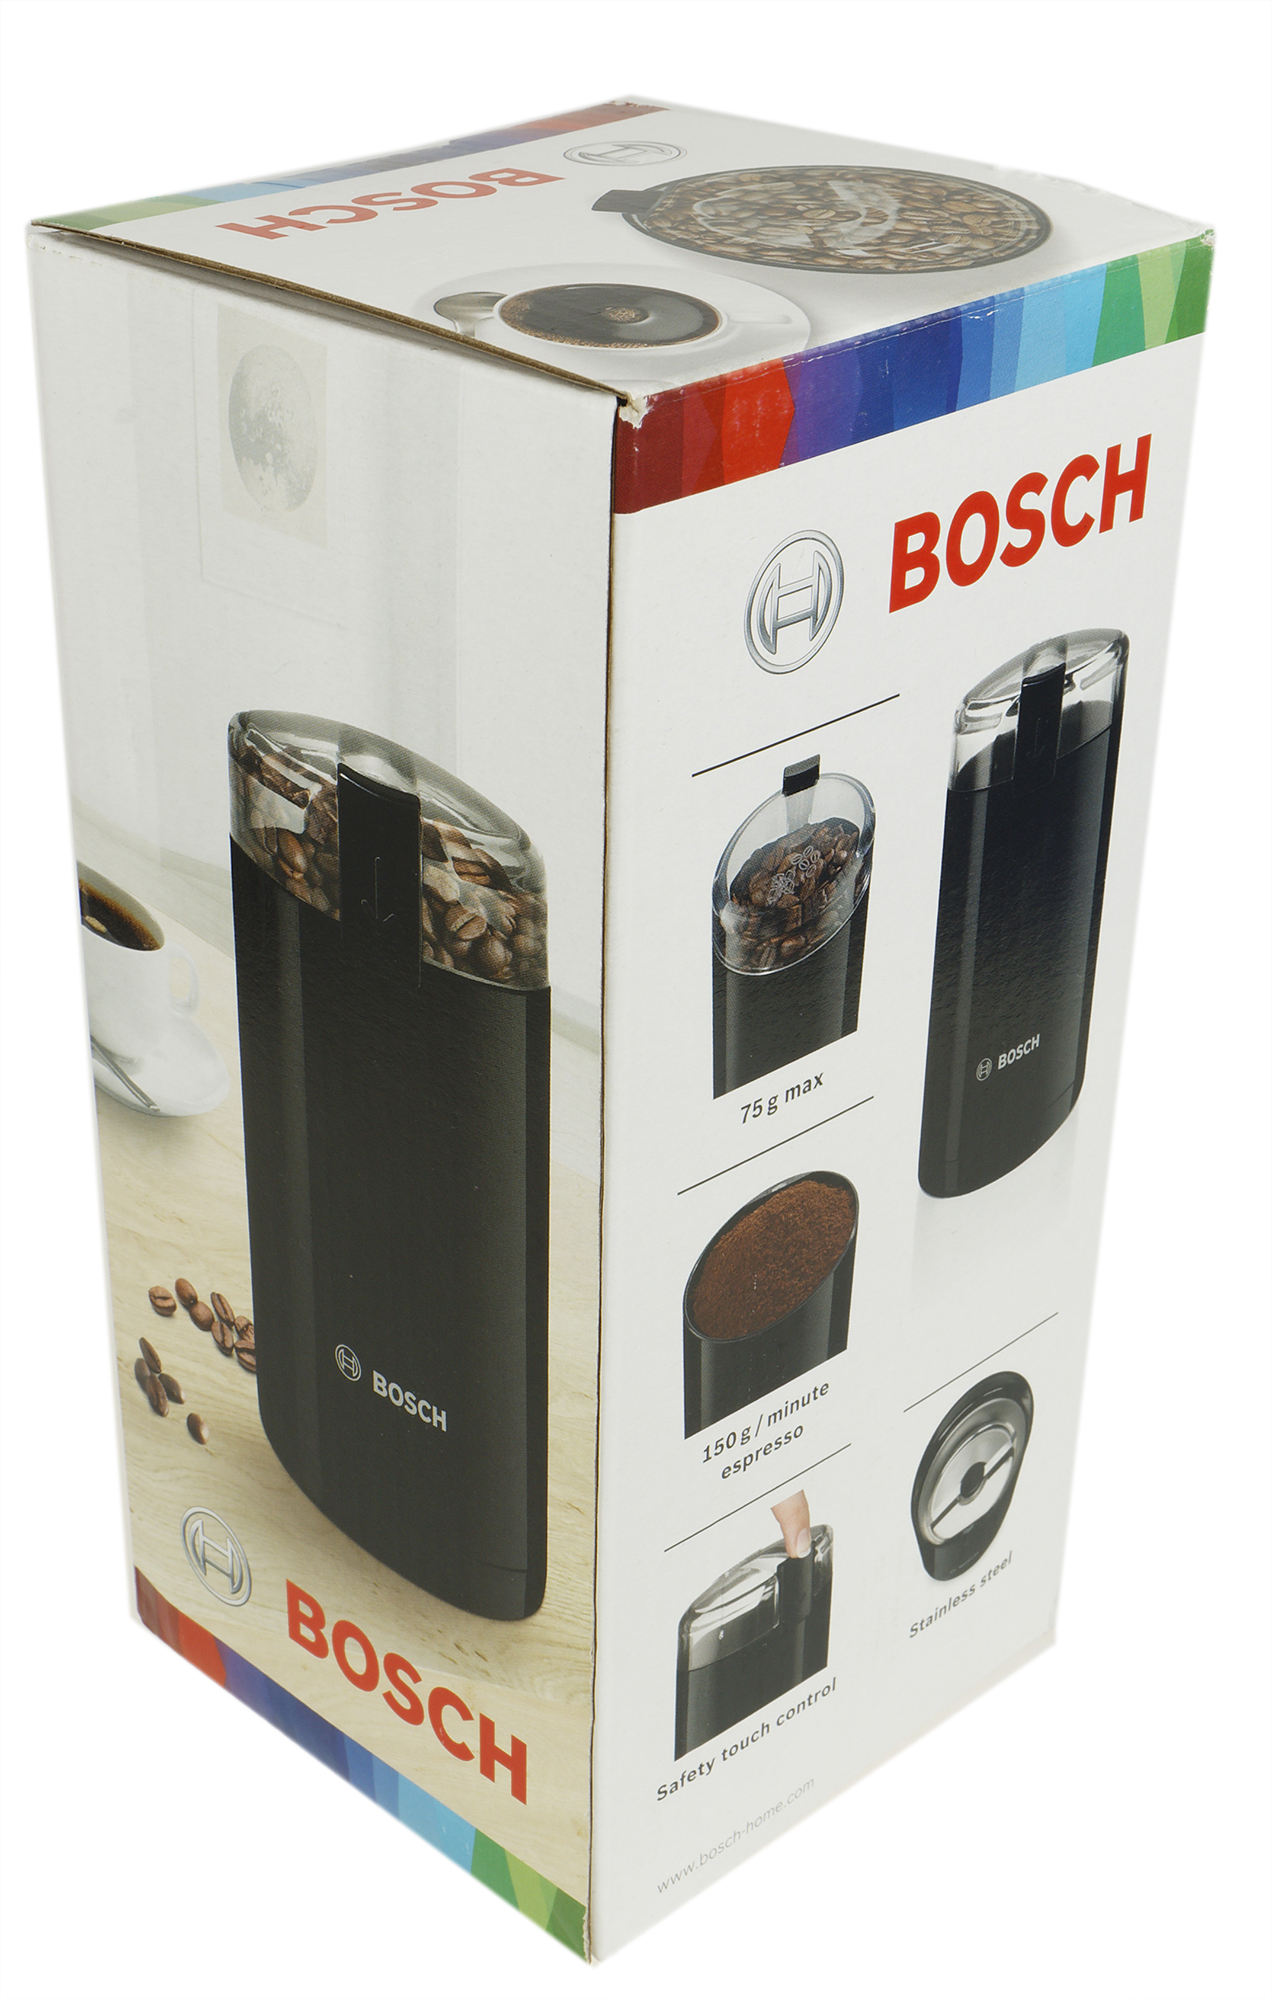 Bosch tsm6a013b. Кофемолка Bosch tsm6a013b. Кофемолка электрическая Bosch tsm6a013b. Роторная кофемолка бош.